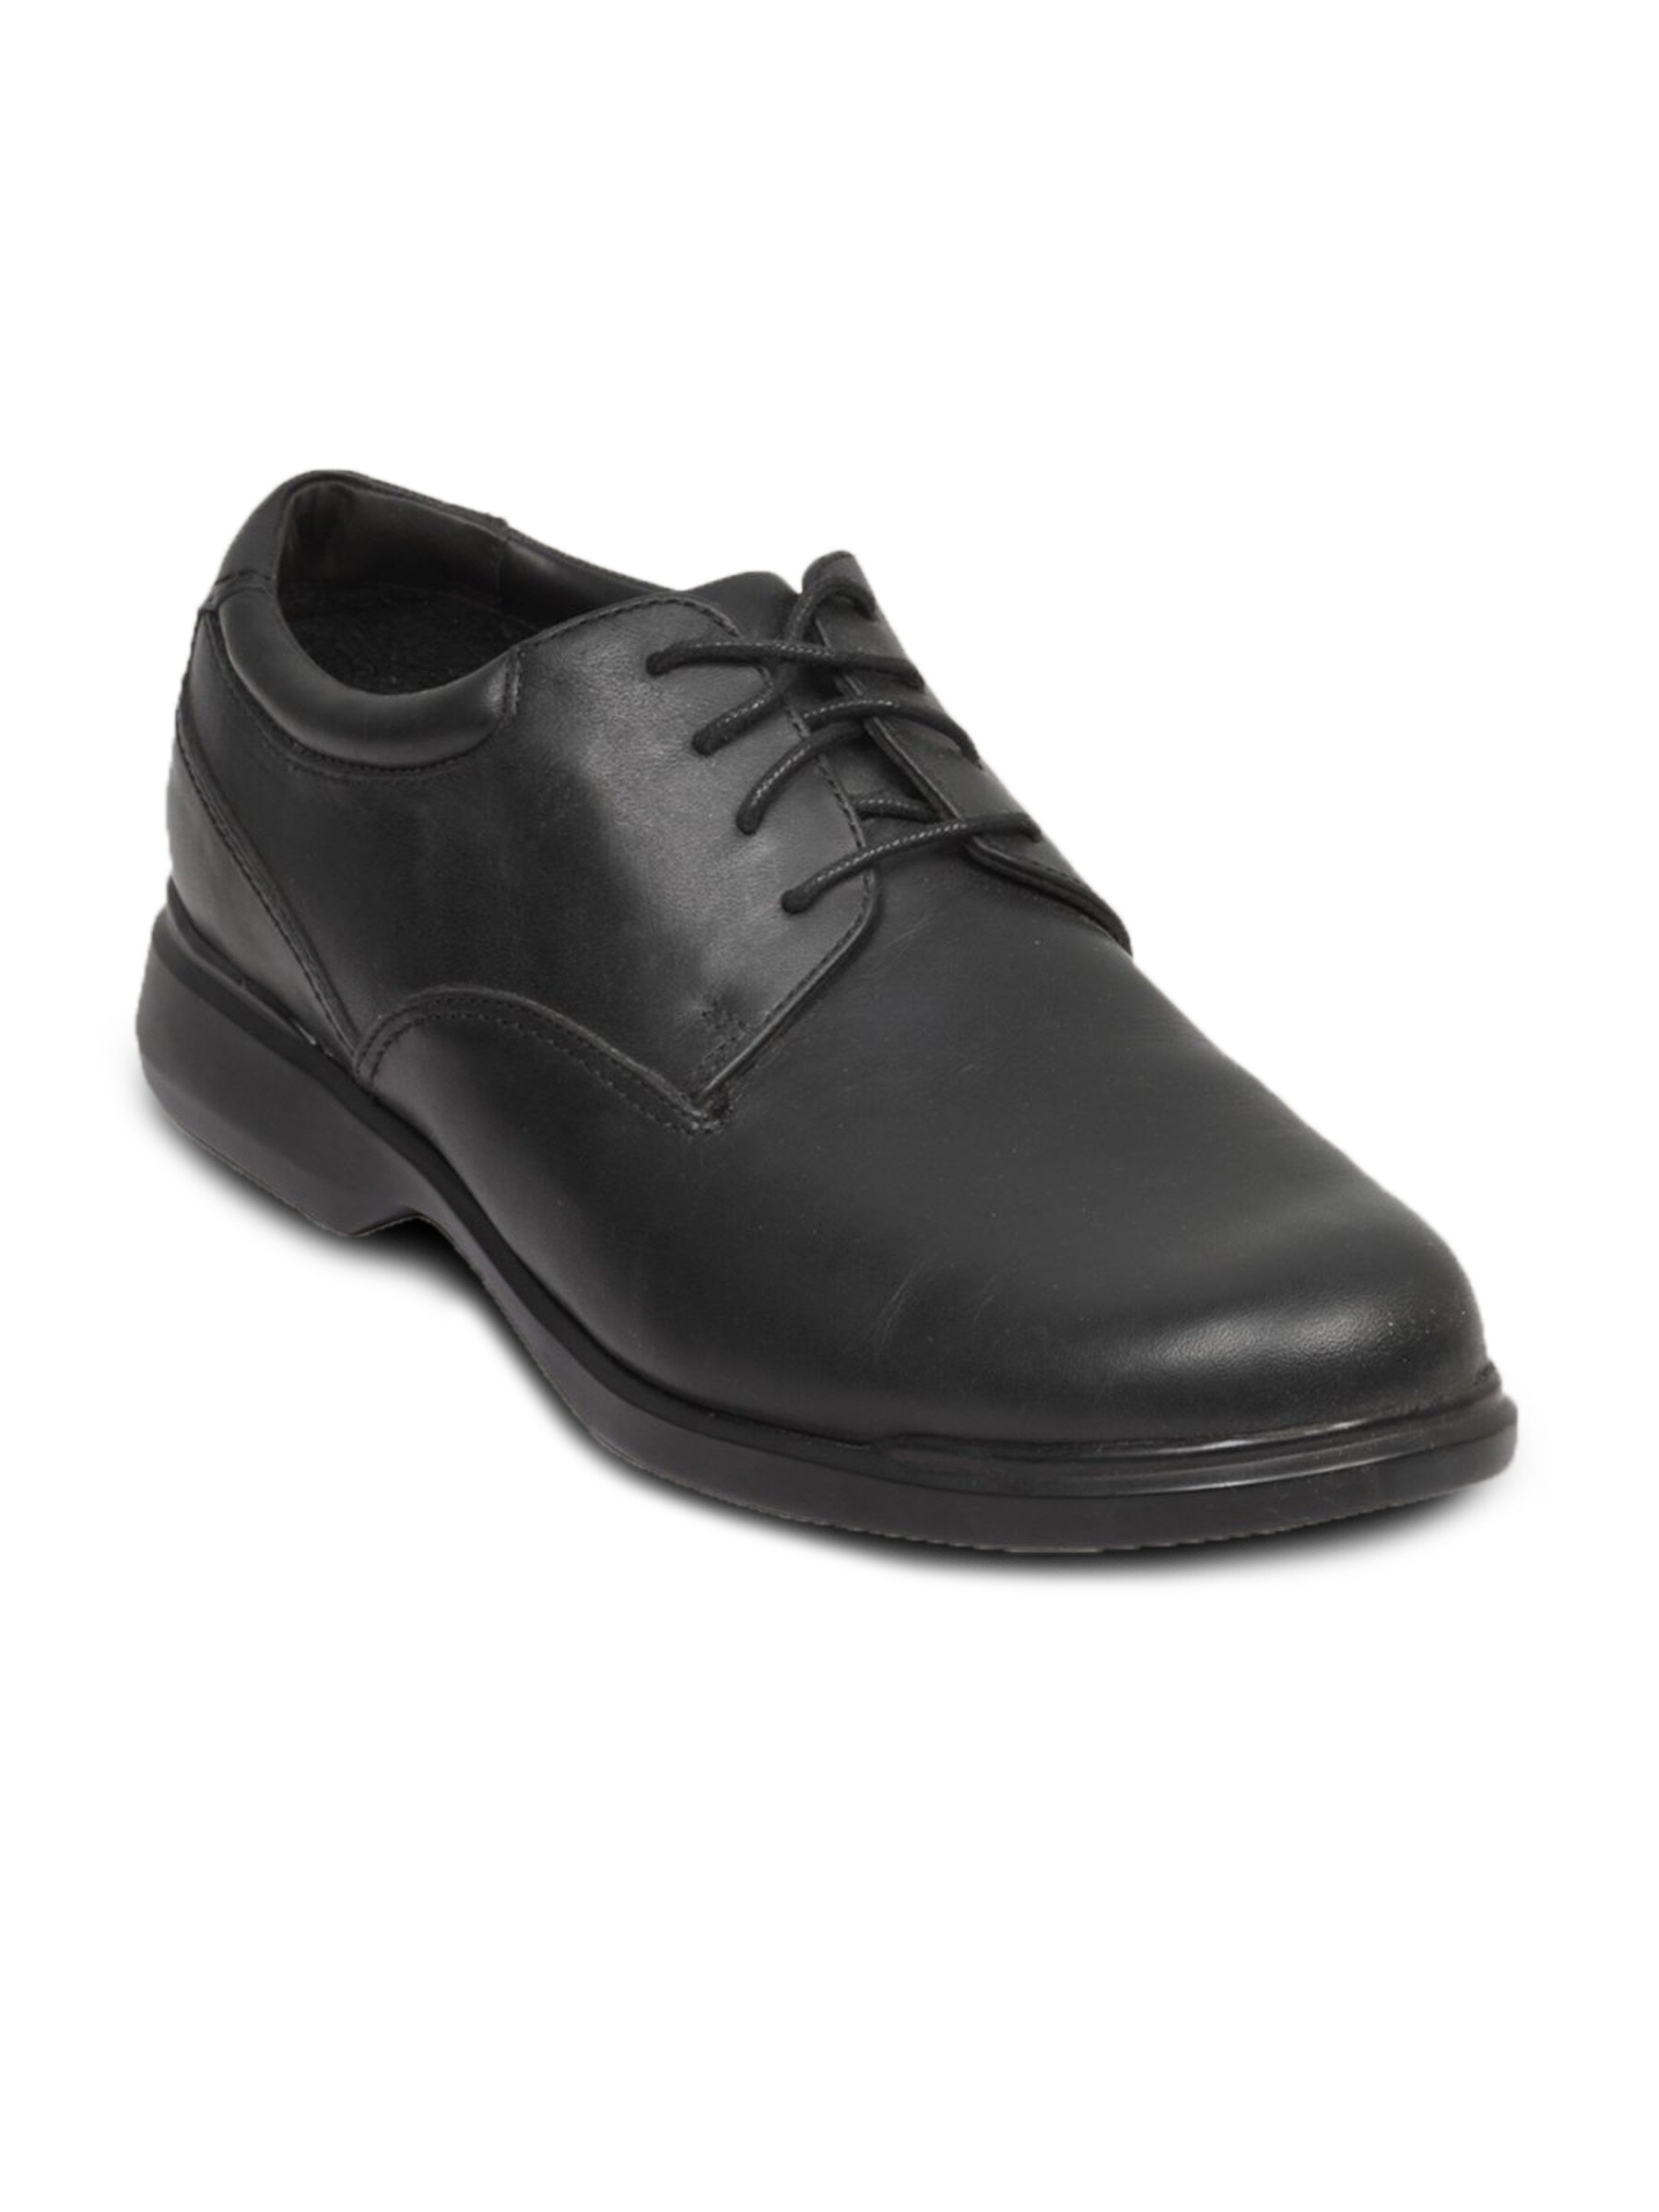 Rockport Men's Ragosta Black Shoe